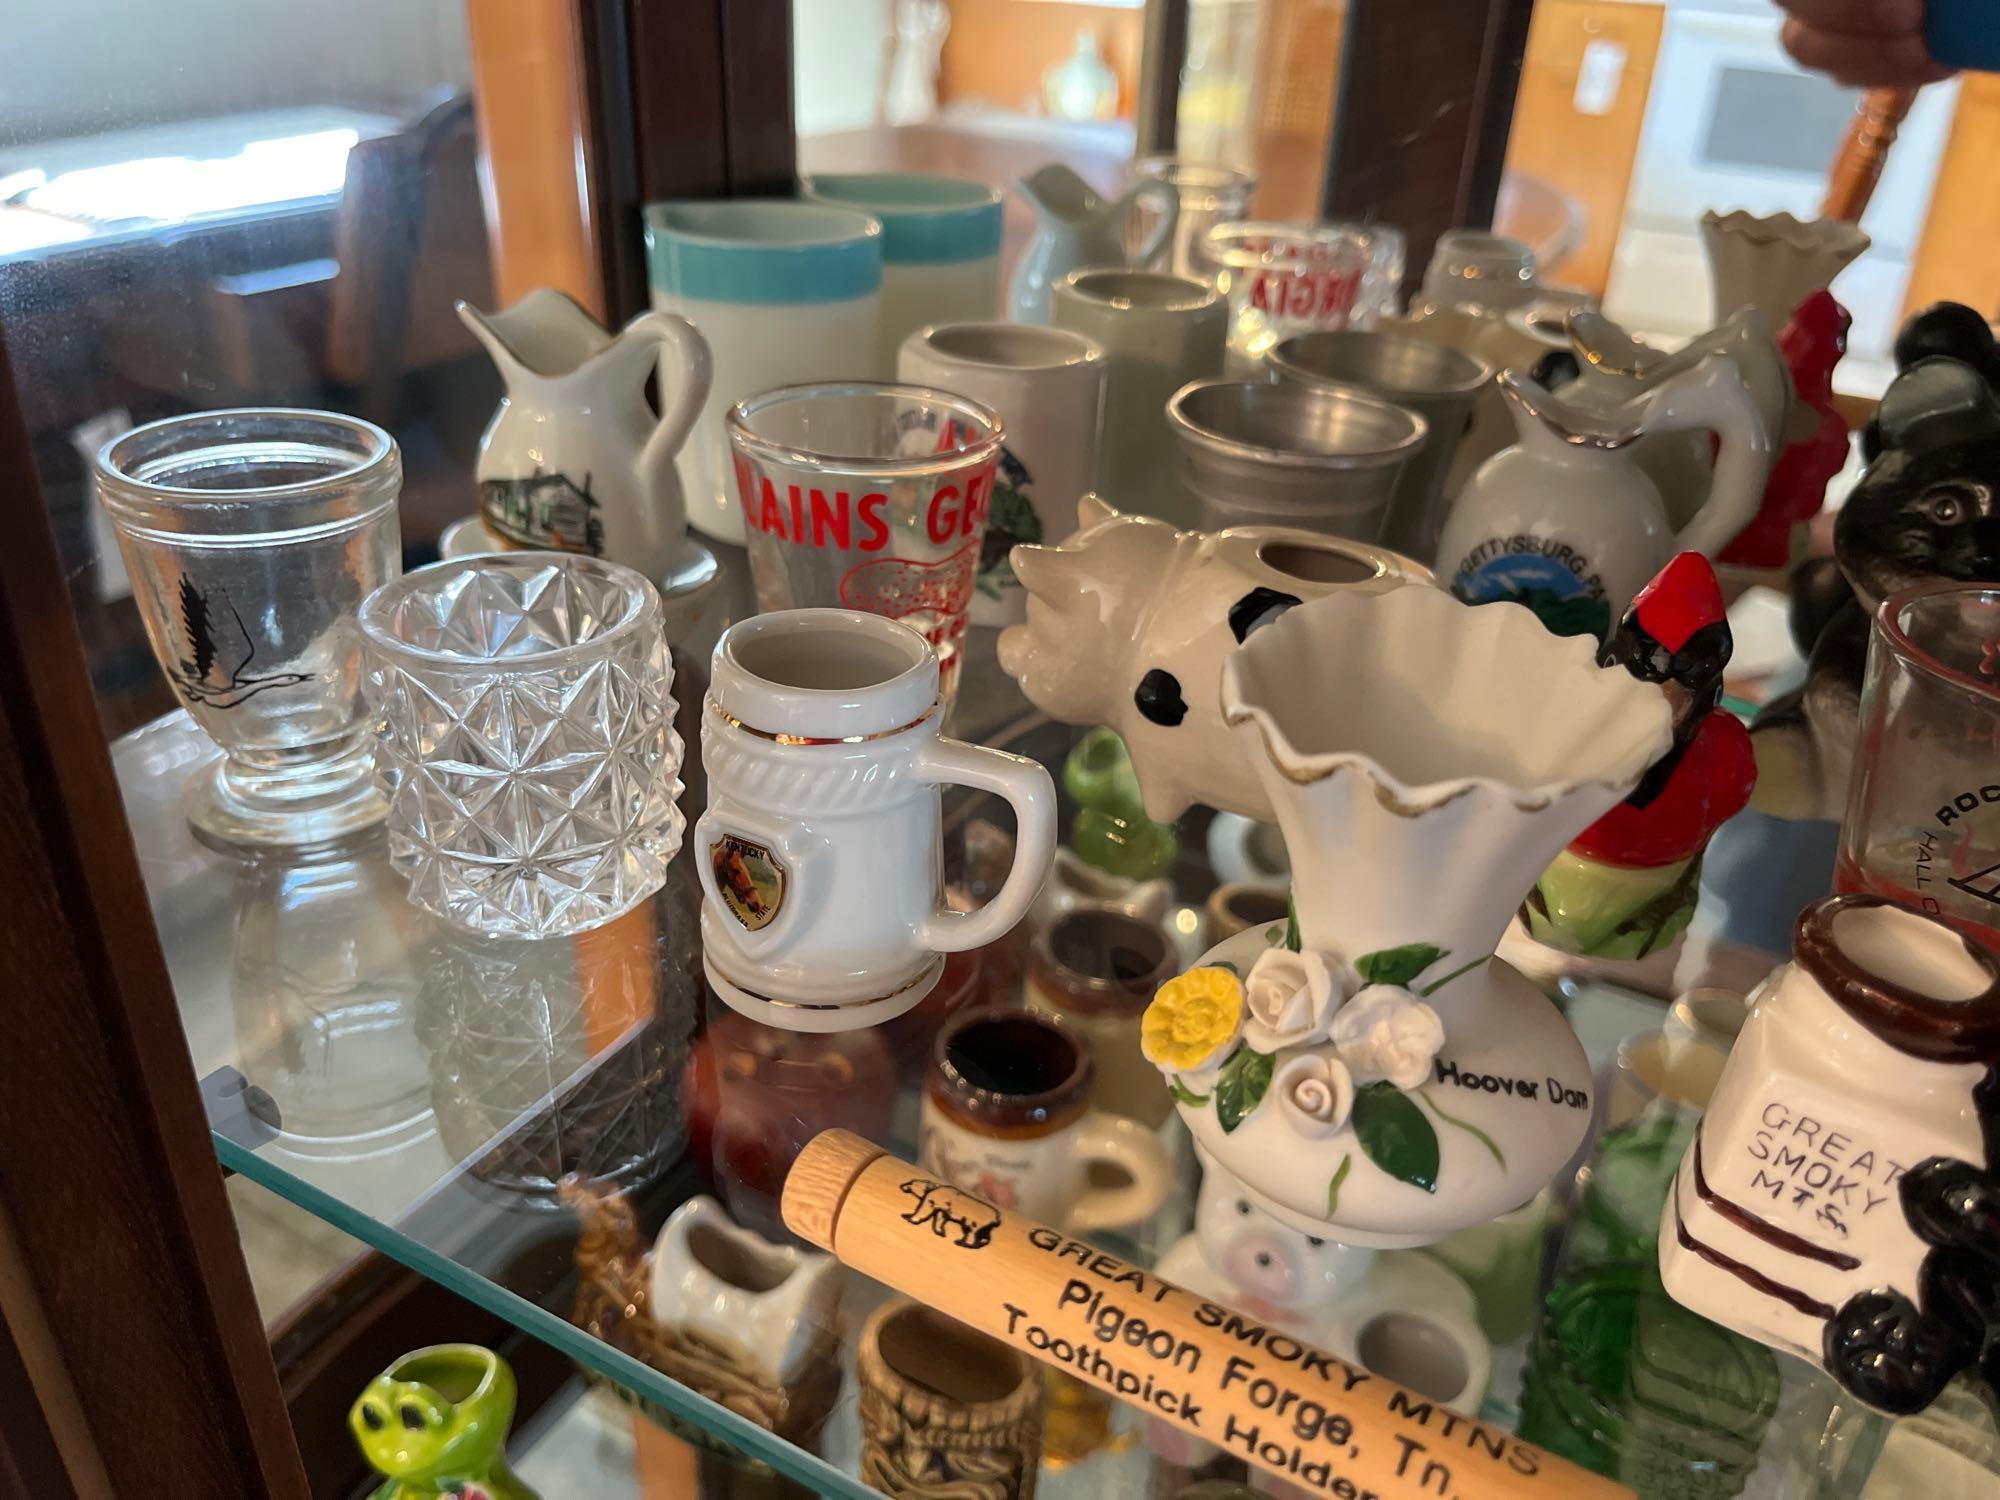 3 shelves of toothpick holders, shot glasses, souvenir items